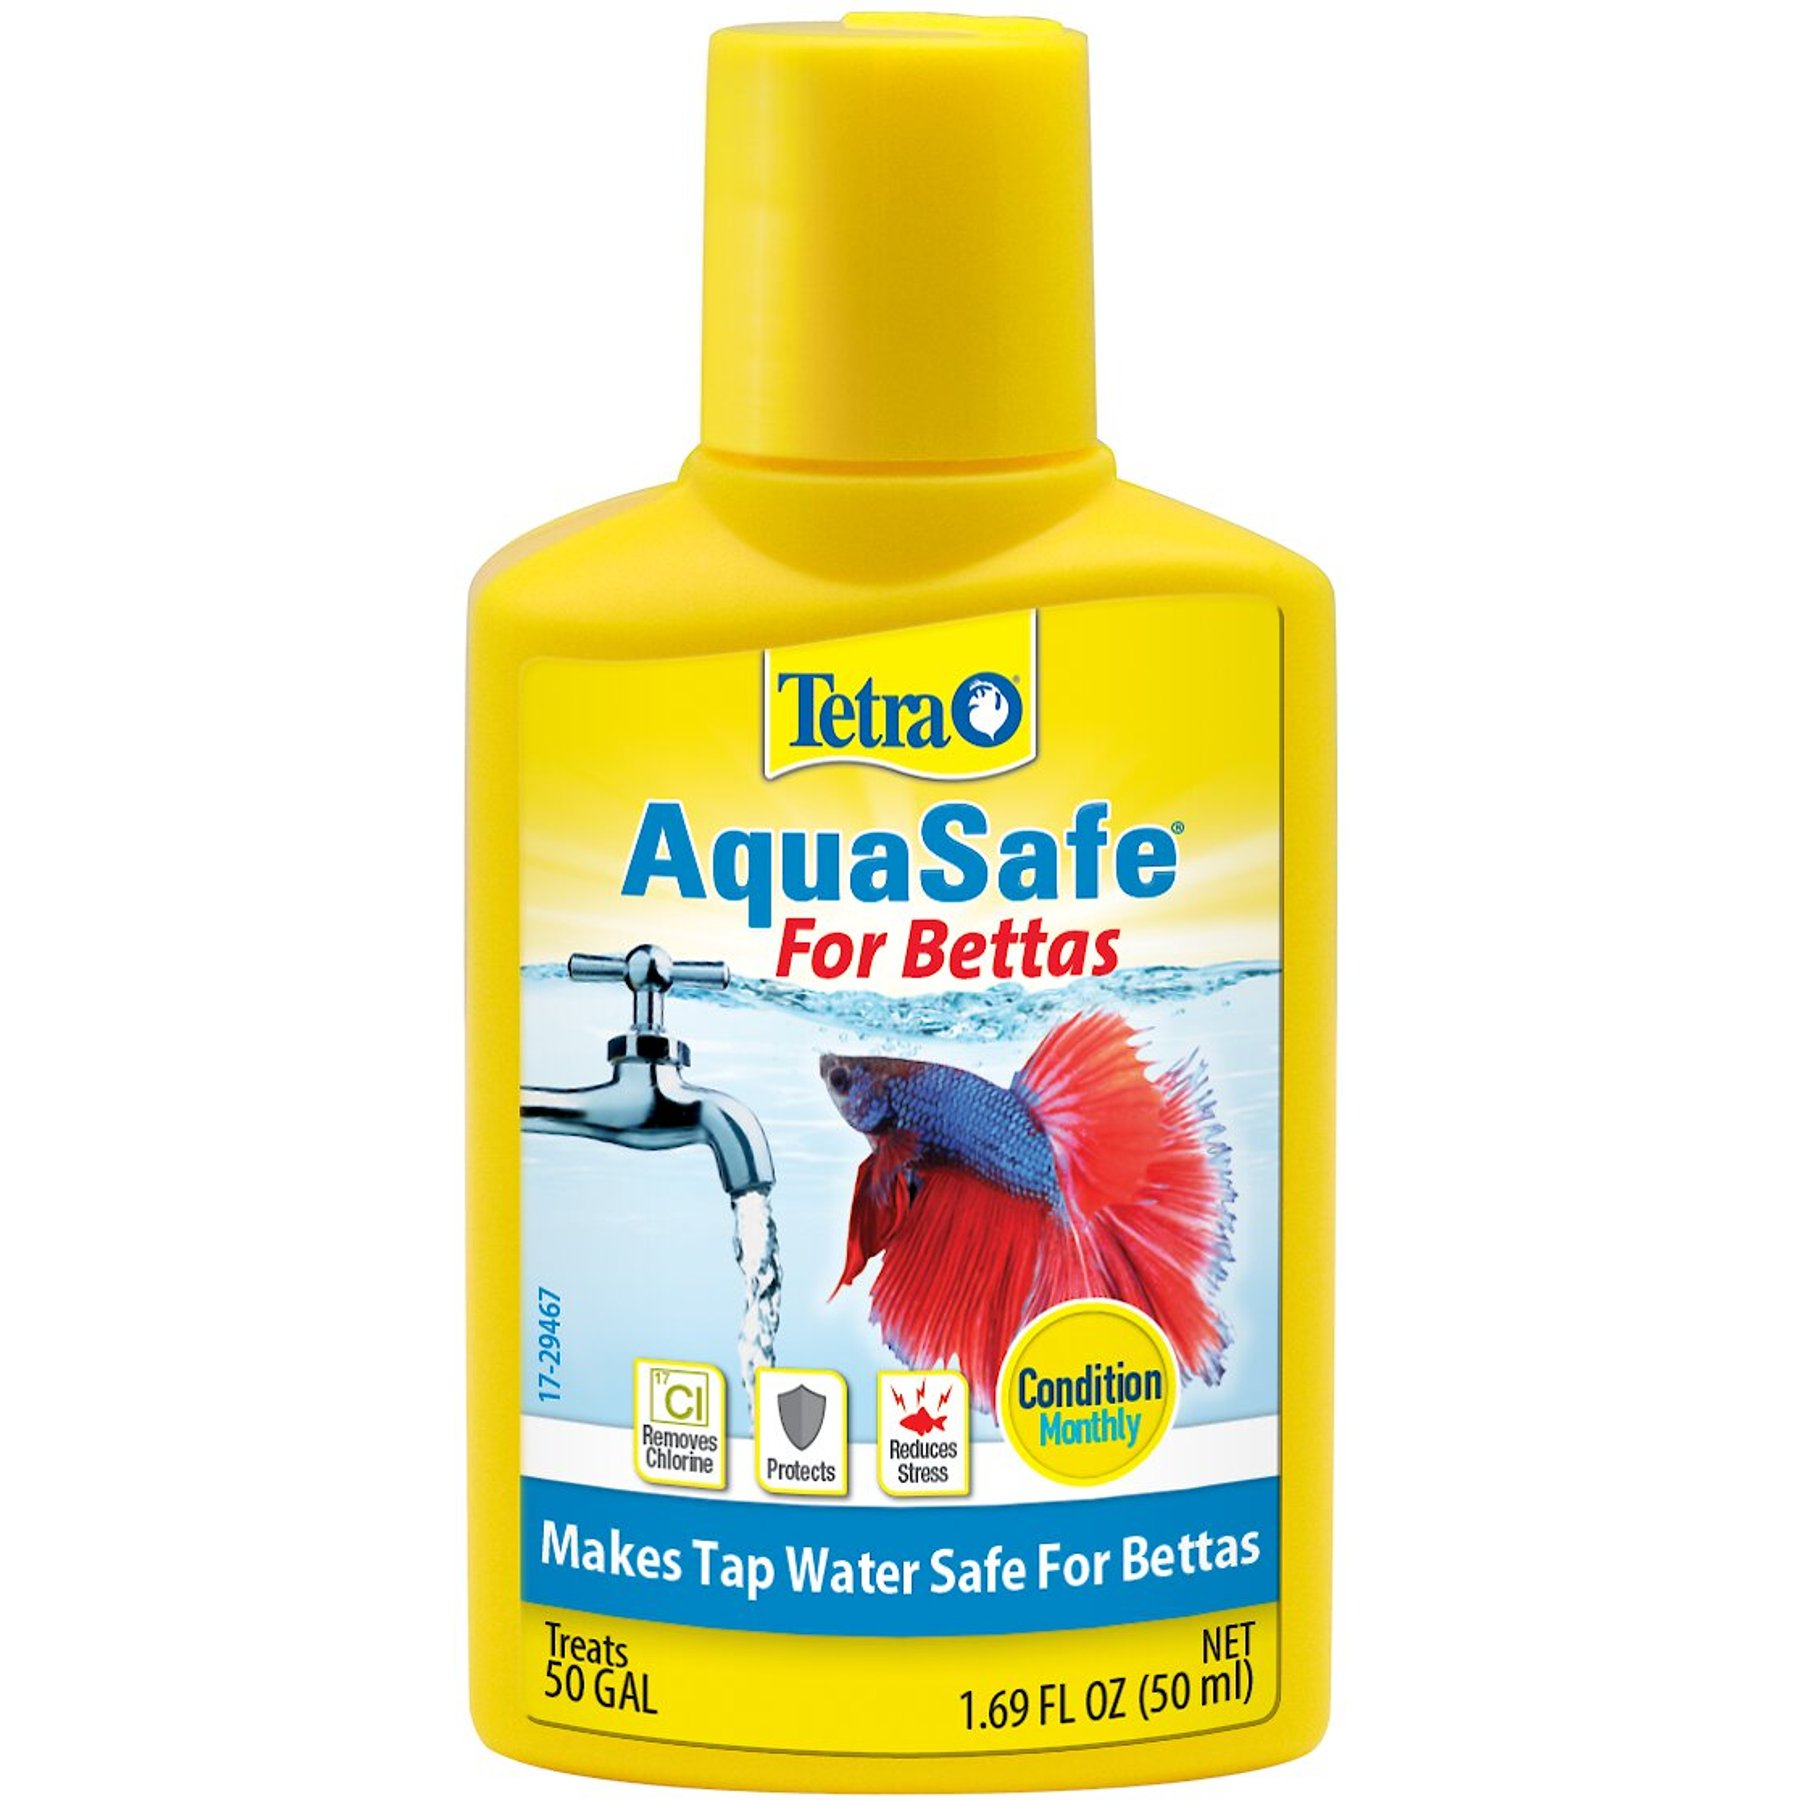 AquaSafe - safe? When do you add to water? : r/bettafish